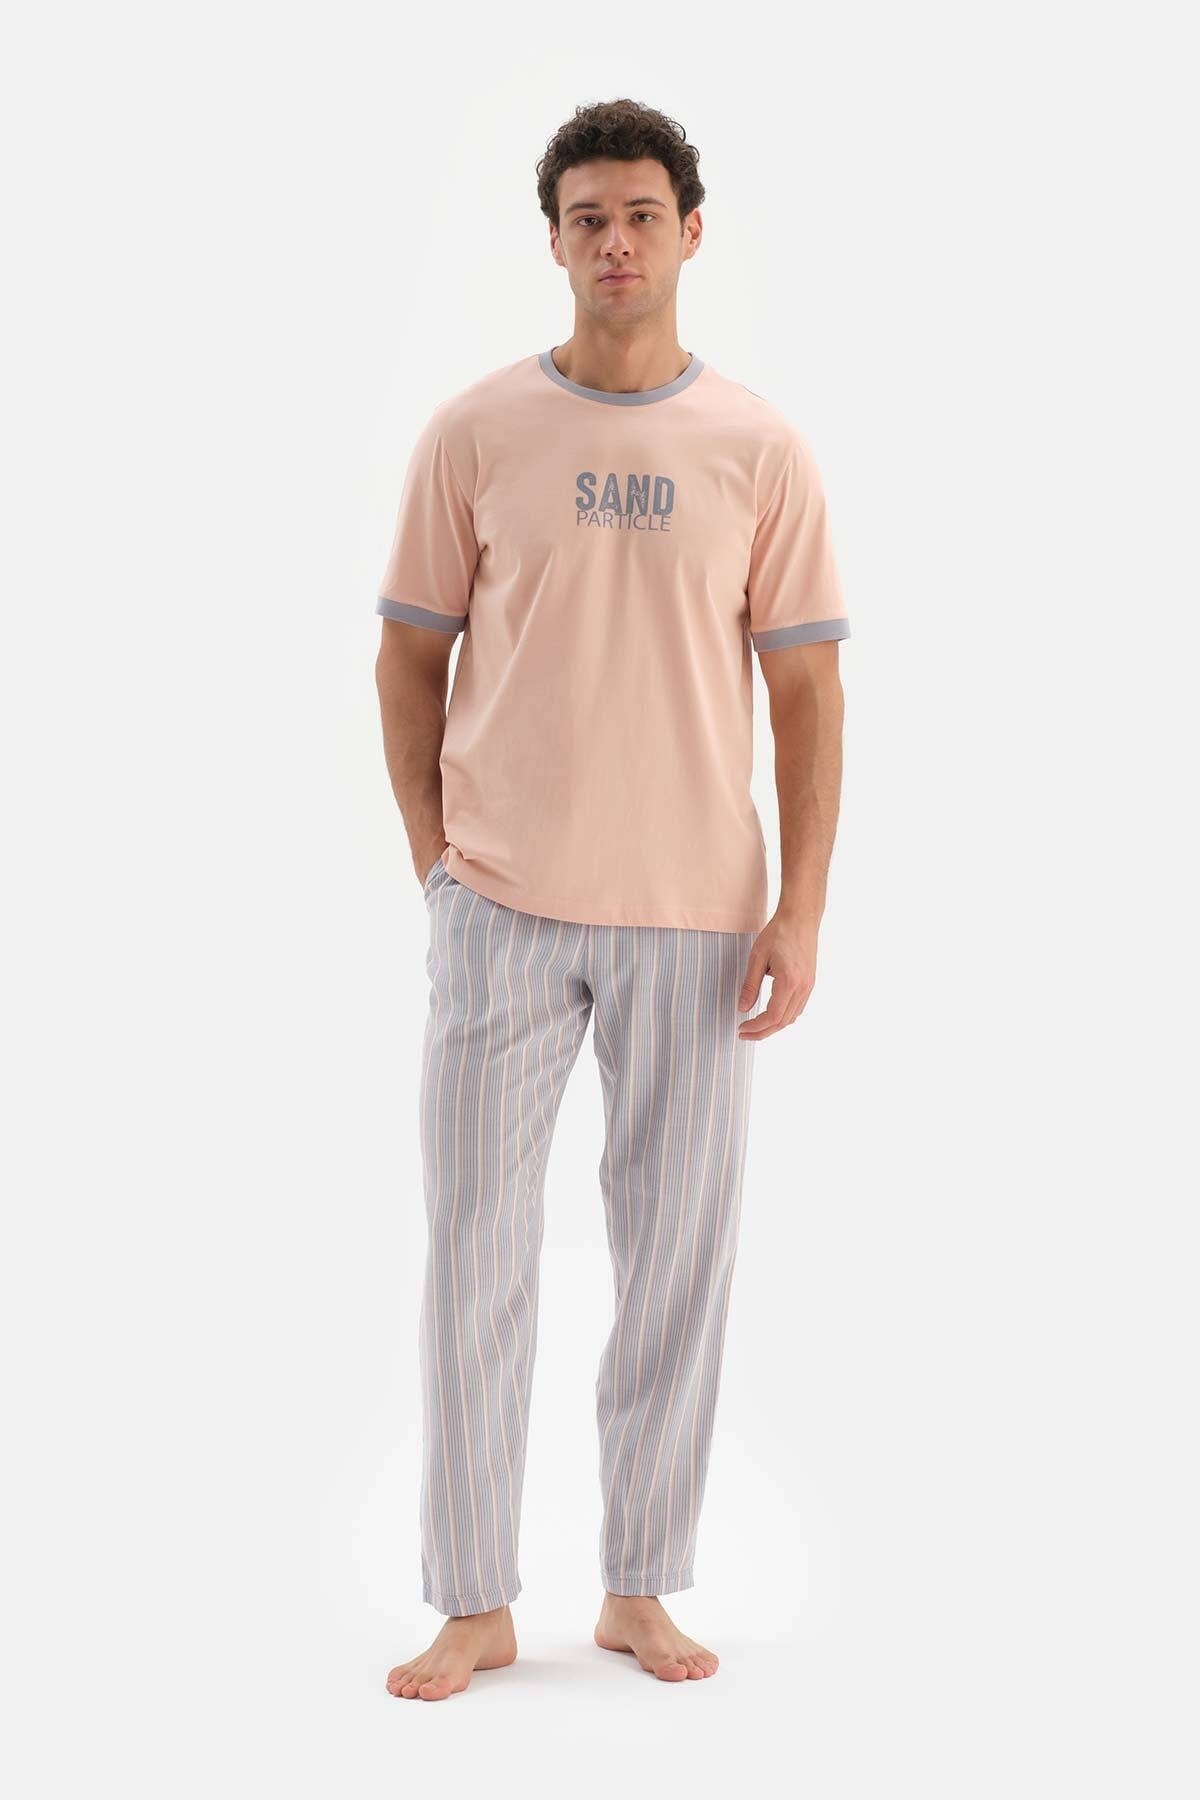 Dagi Salmon Printed Top Striped Woven Bottom Pajamas Set